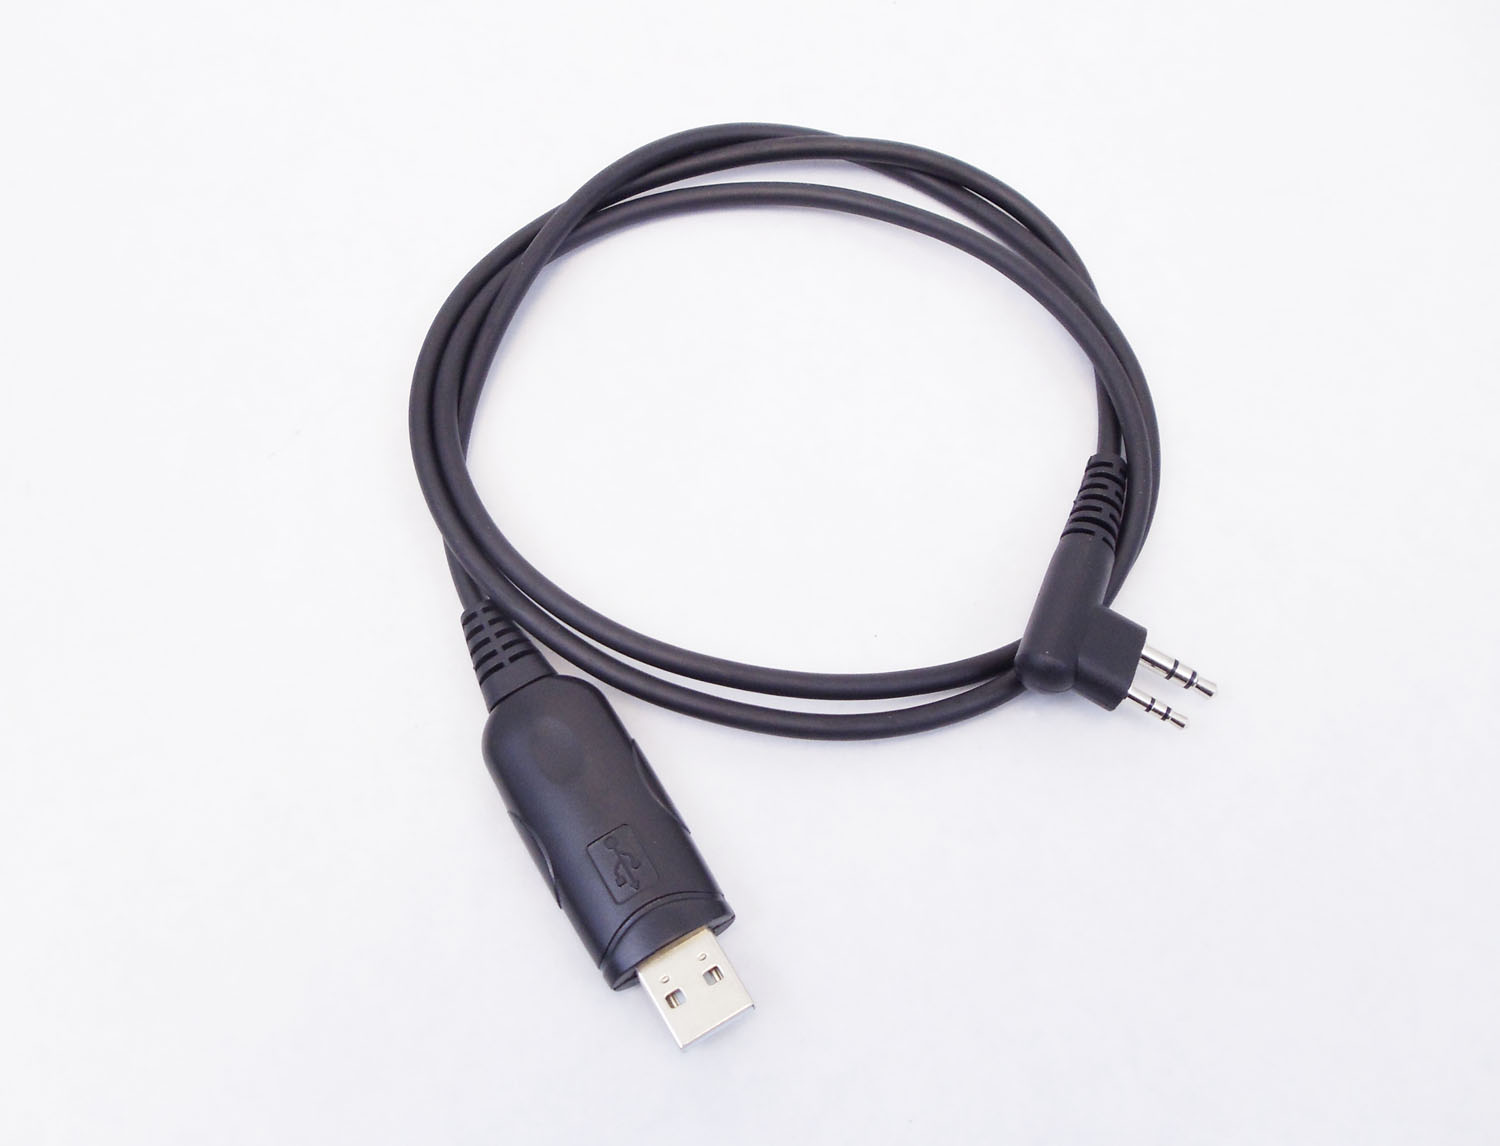 Blackbox - USB Programing Cable For The Blackbox Plus Series Radios